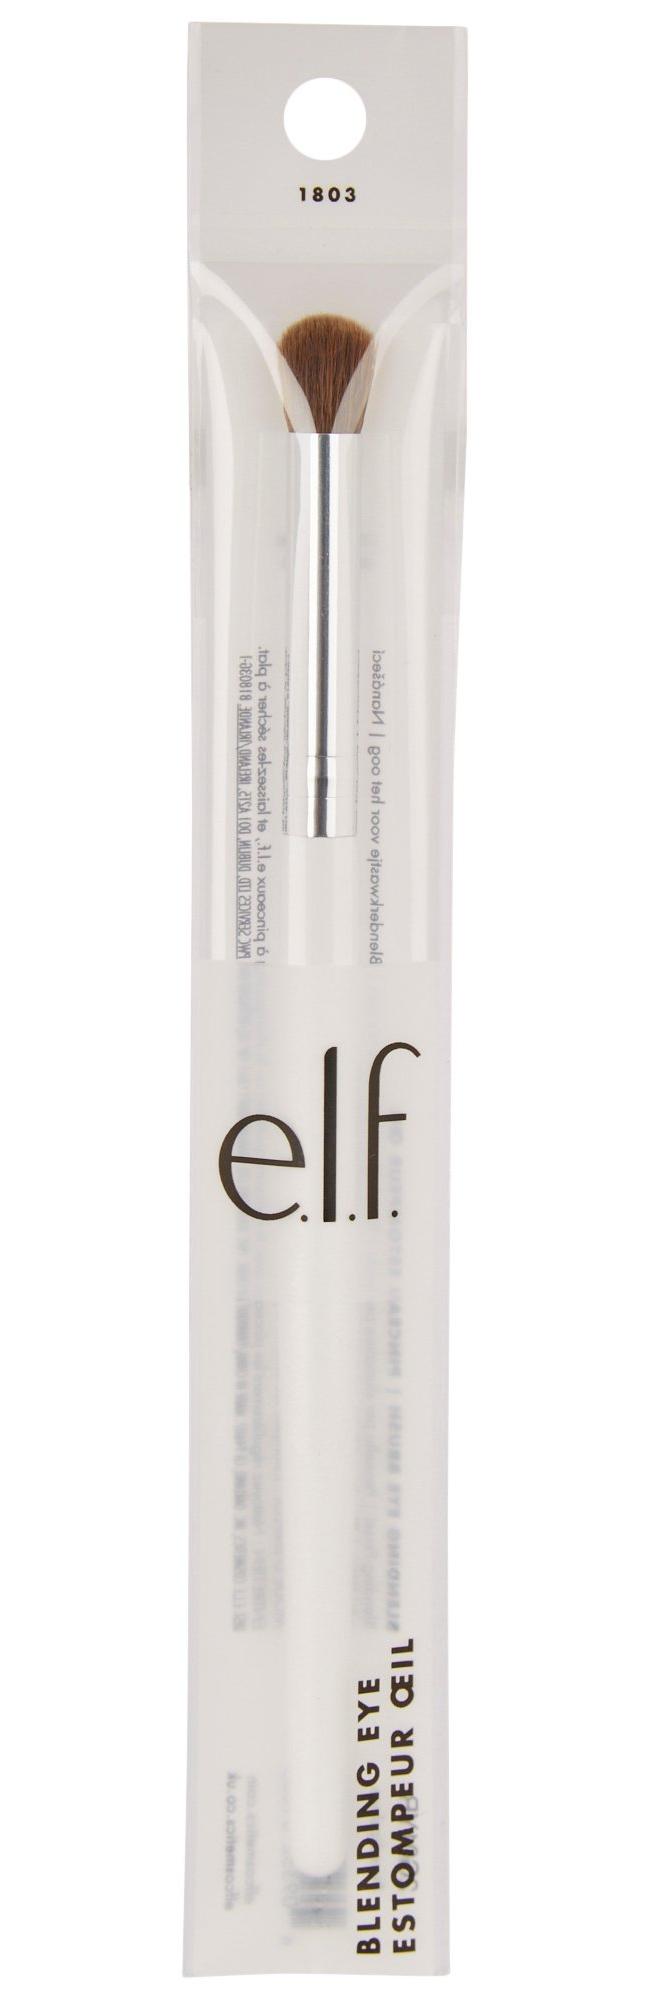 E.L.F. Cosmetics Blending Eye Brush EF1803